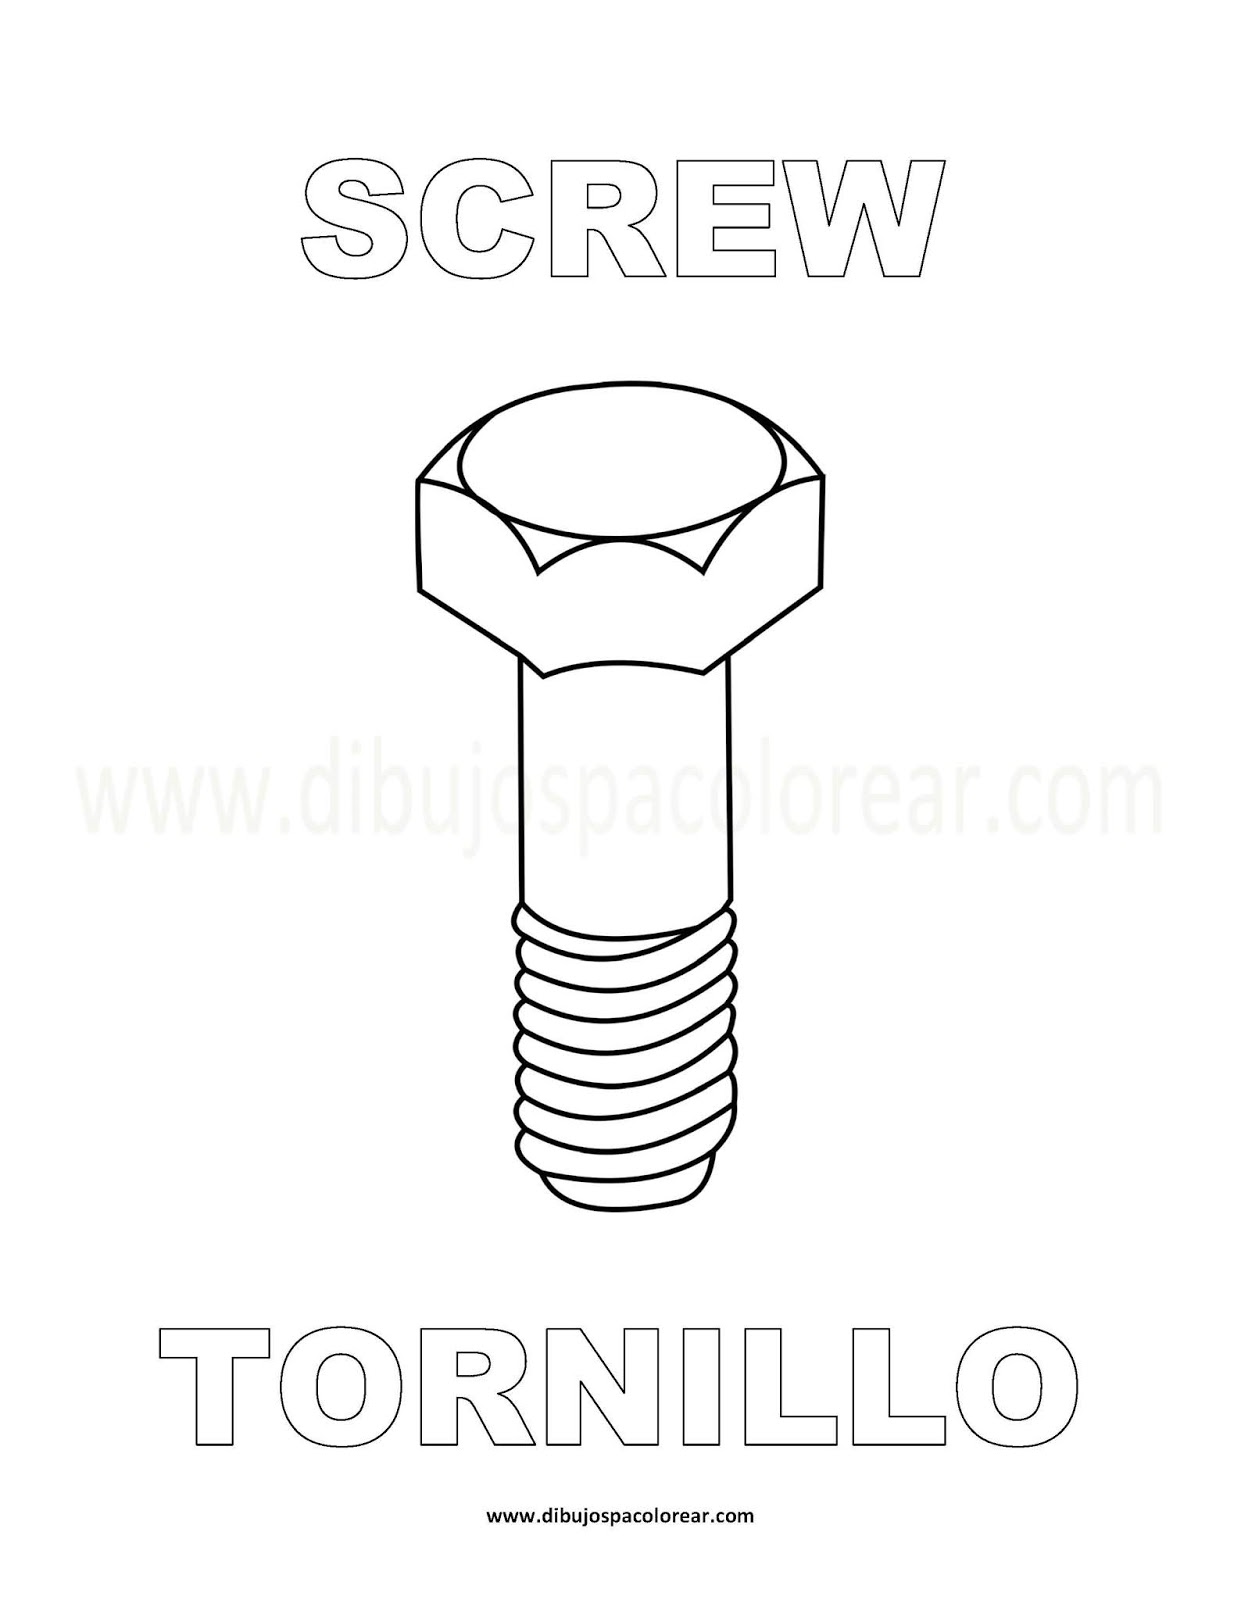 Dibujos Inglés - Español con T: Tornillo - Screw